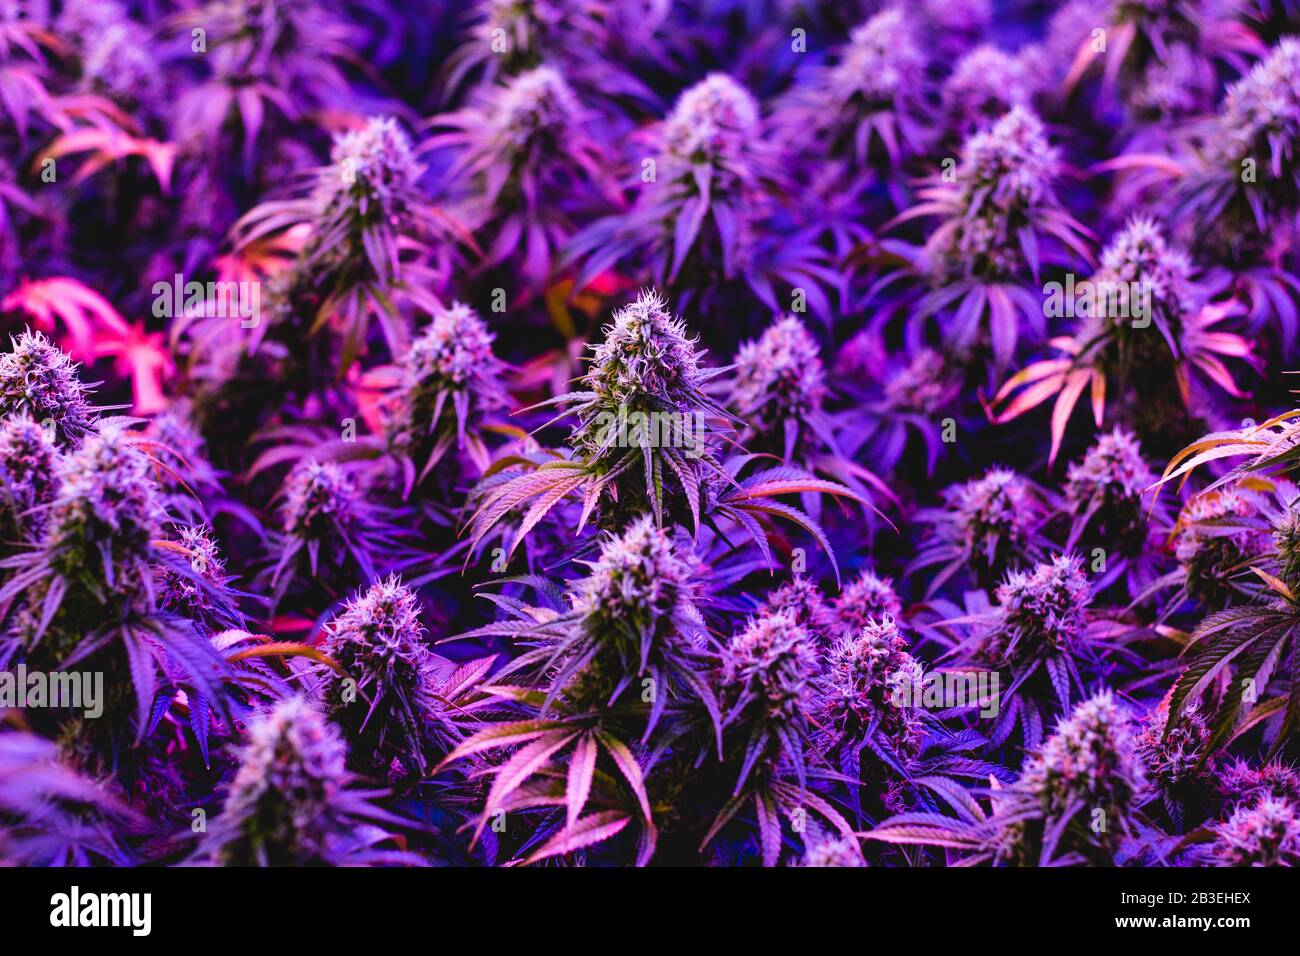 Multiple purple mature indoor medical recreational marijuana cannabis industry plants with large developed cola flowers Stock Photo